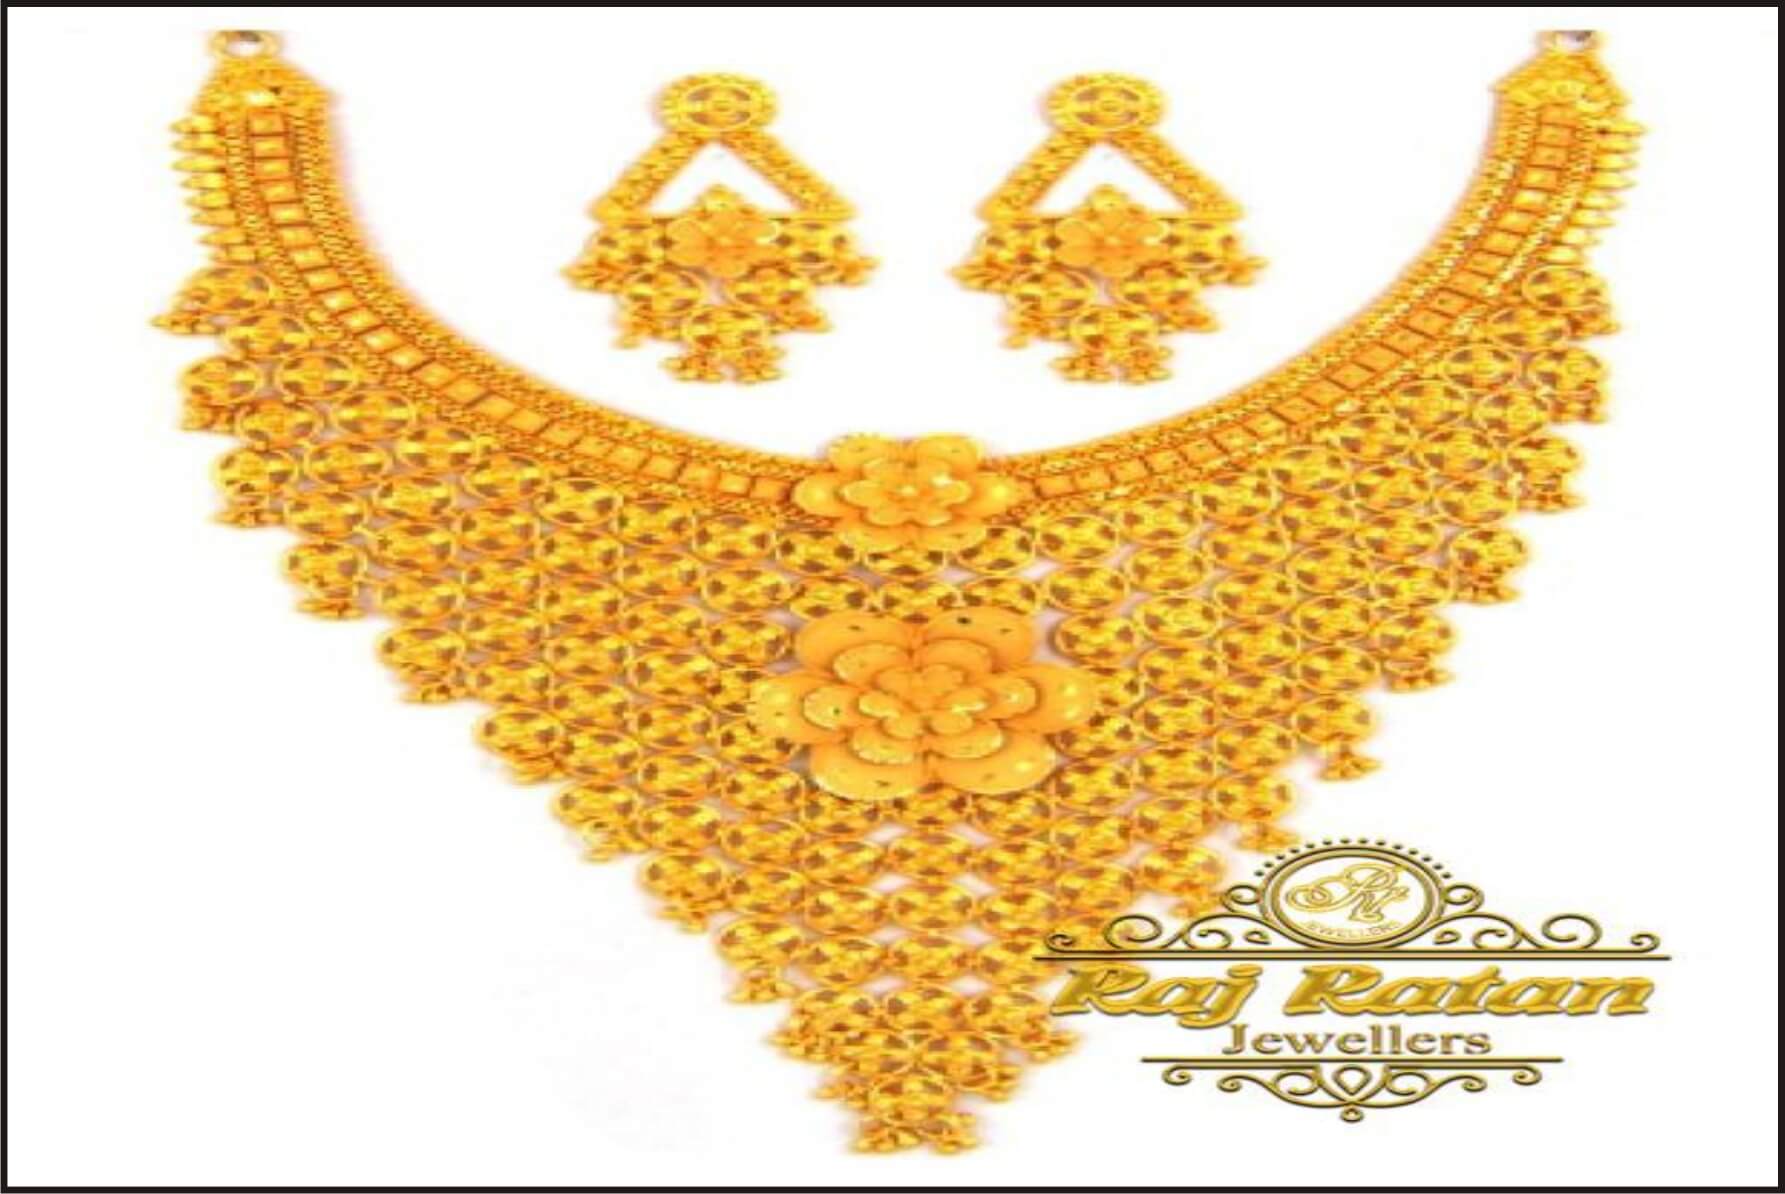 RAJ RATAN JEWELLERS in Durgapur, Jewellery showroom Durgapur